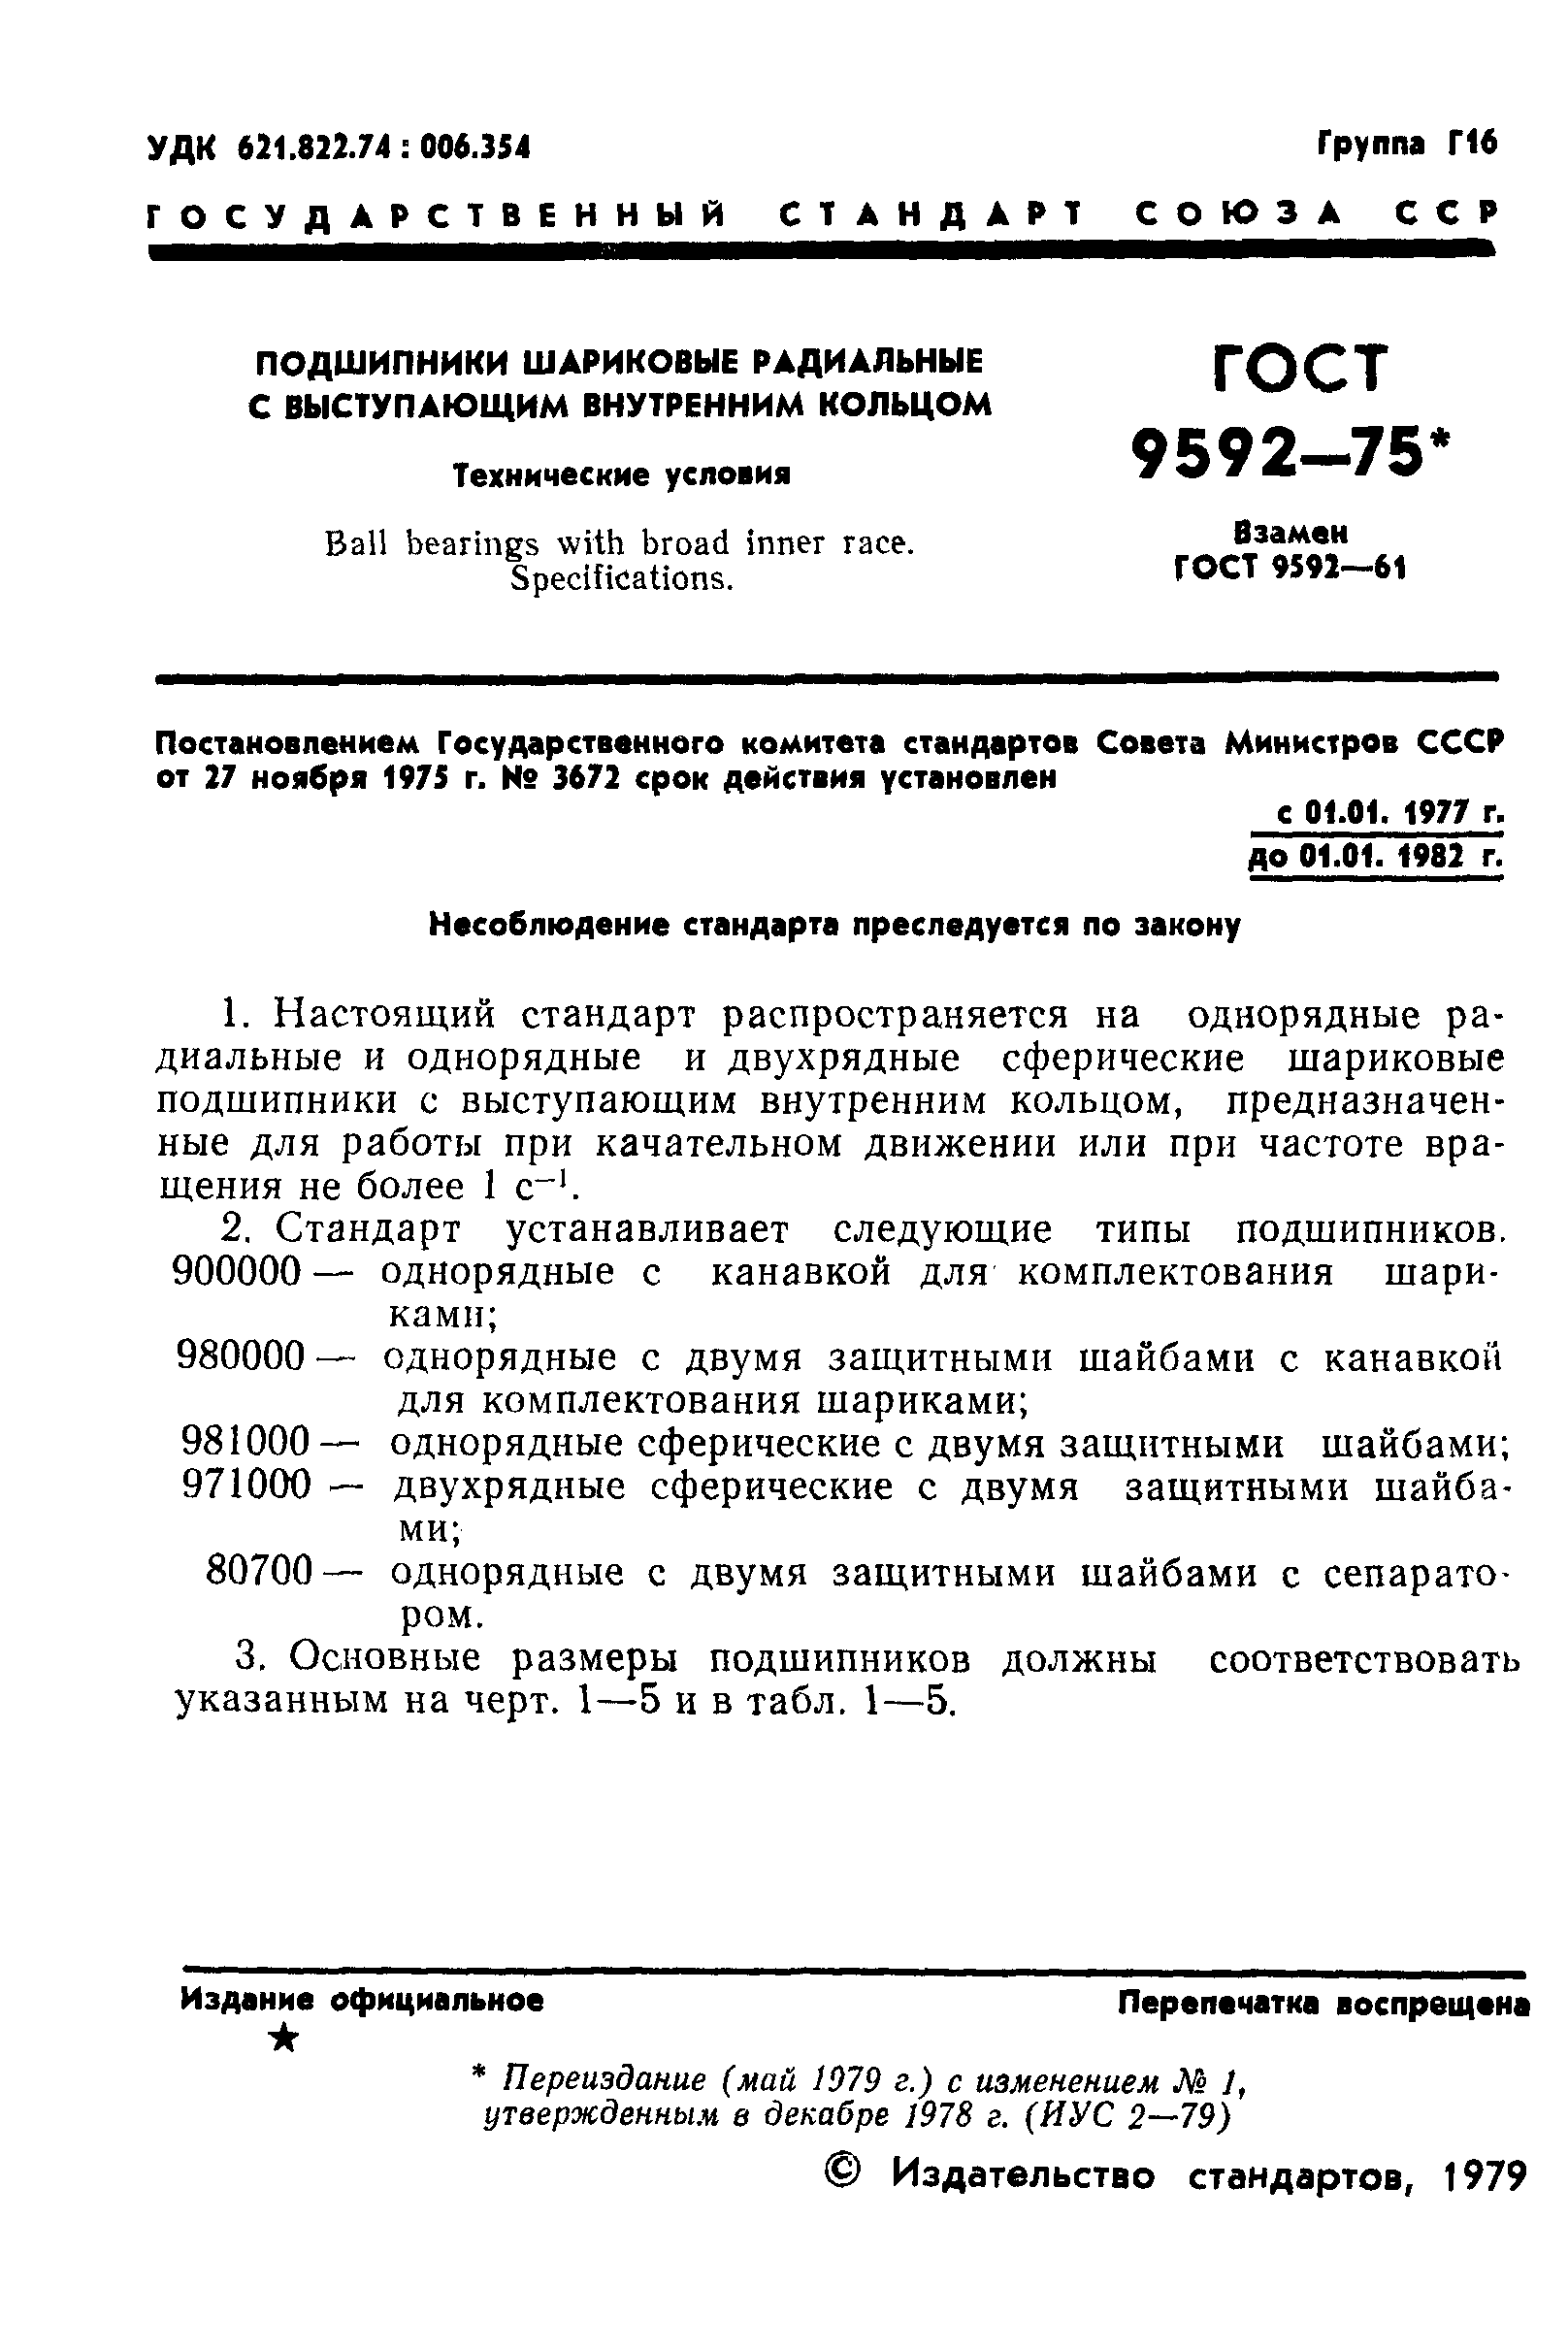 ГОСТ 9592-75